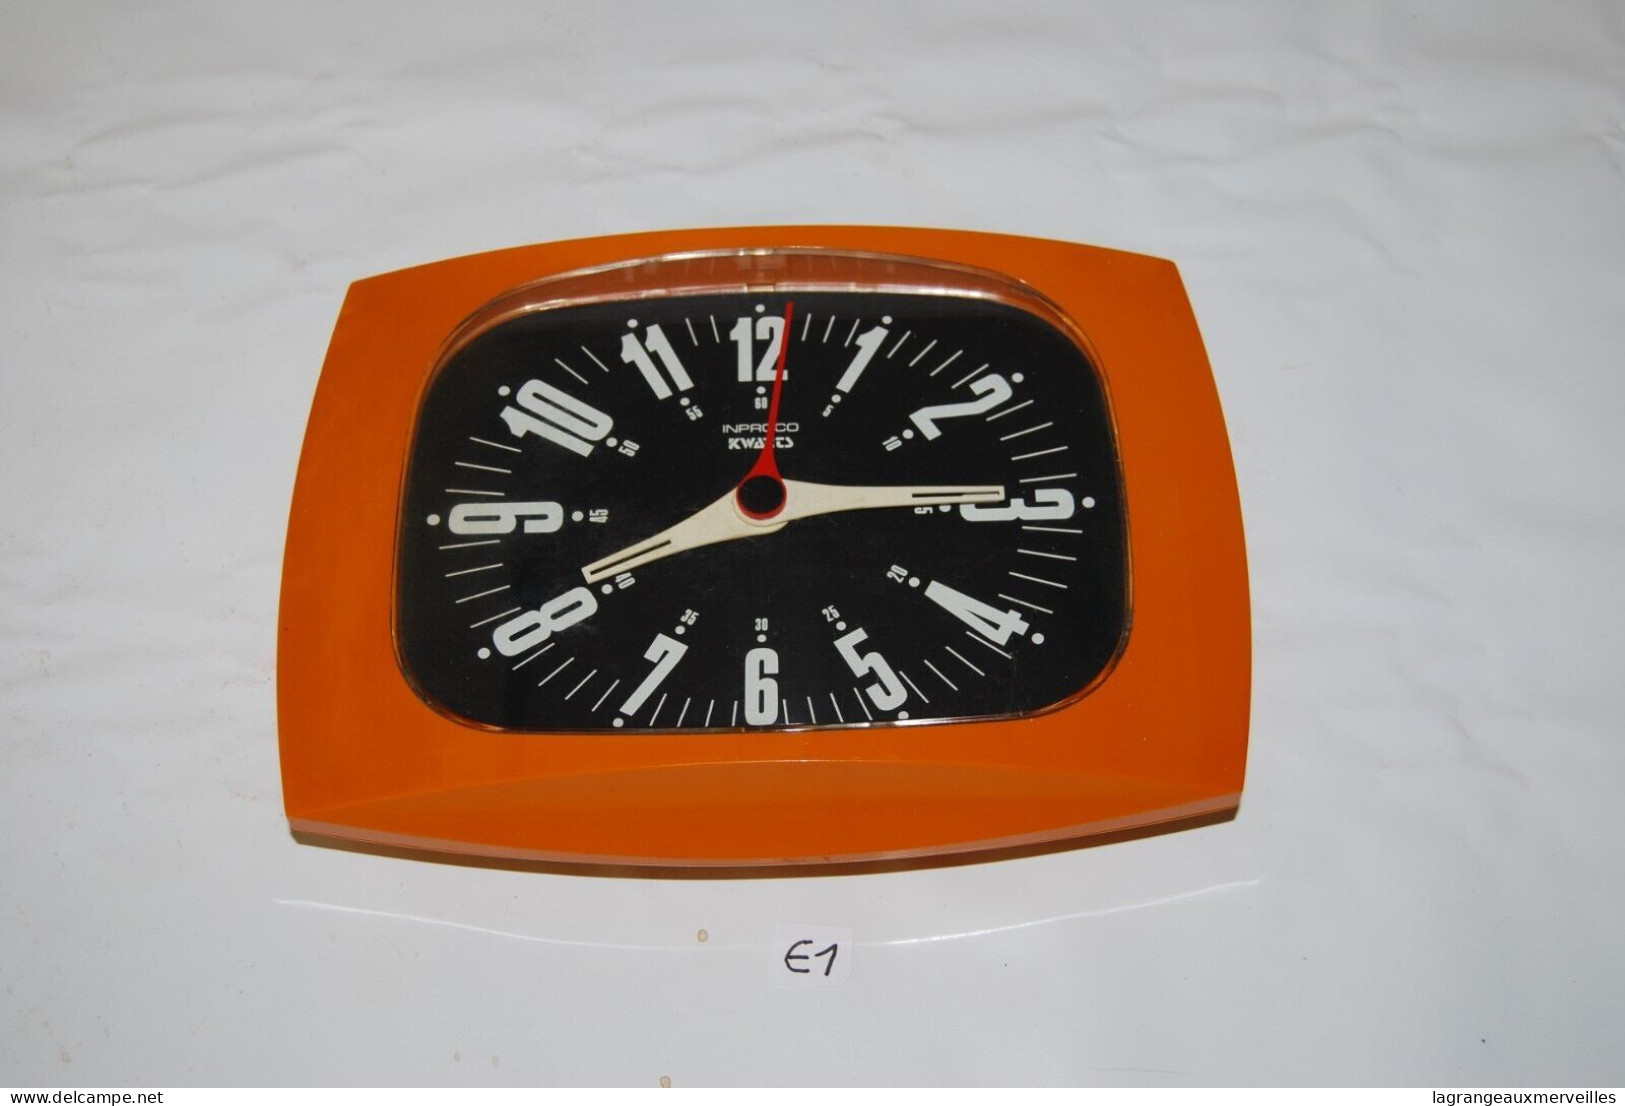 E1 Ancienne Horloge INPROCO Kwartz - Vintage - Orange - Wandklokken